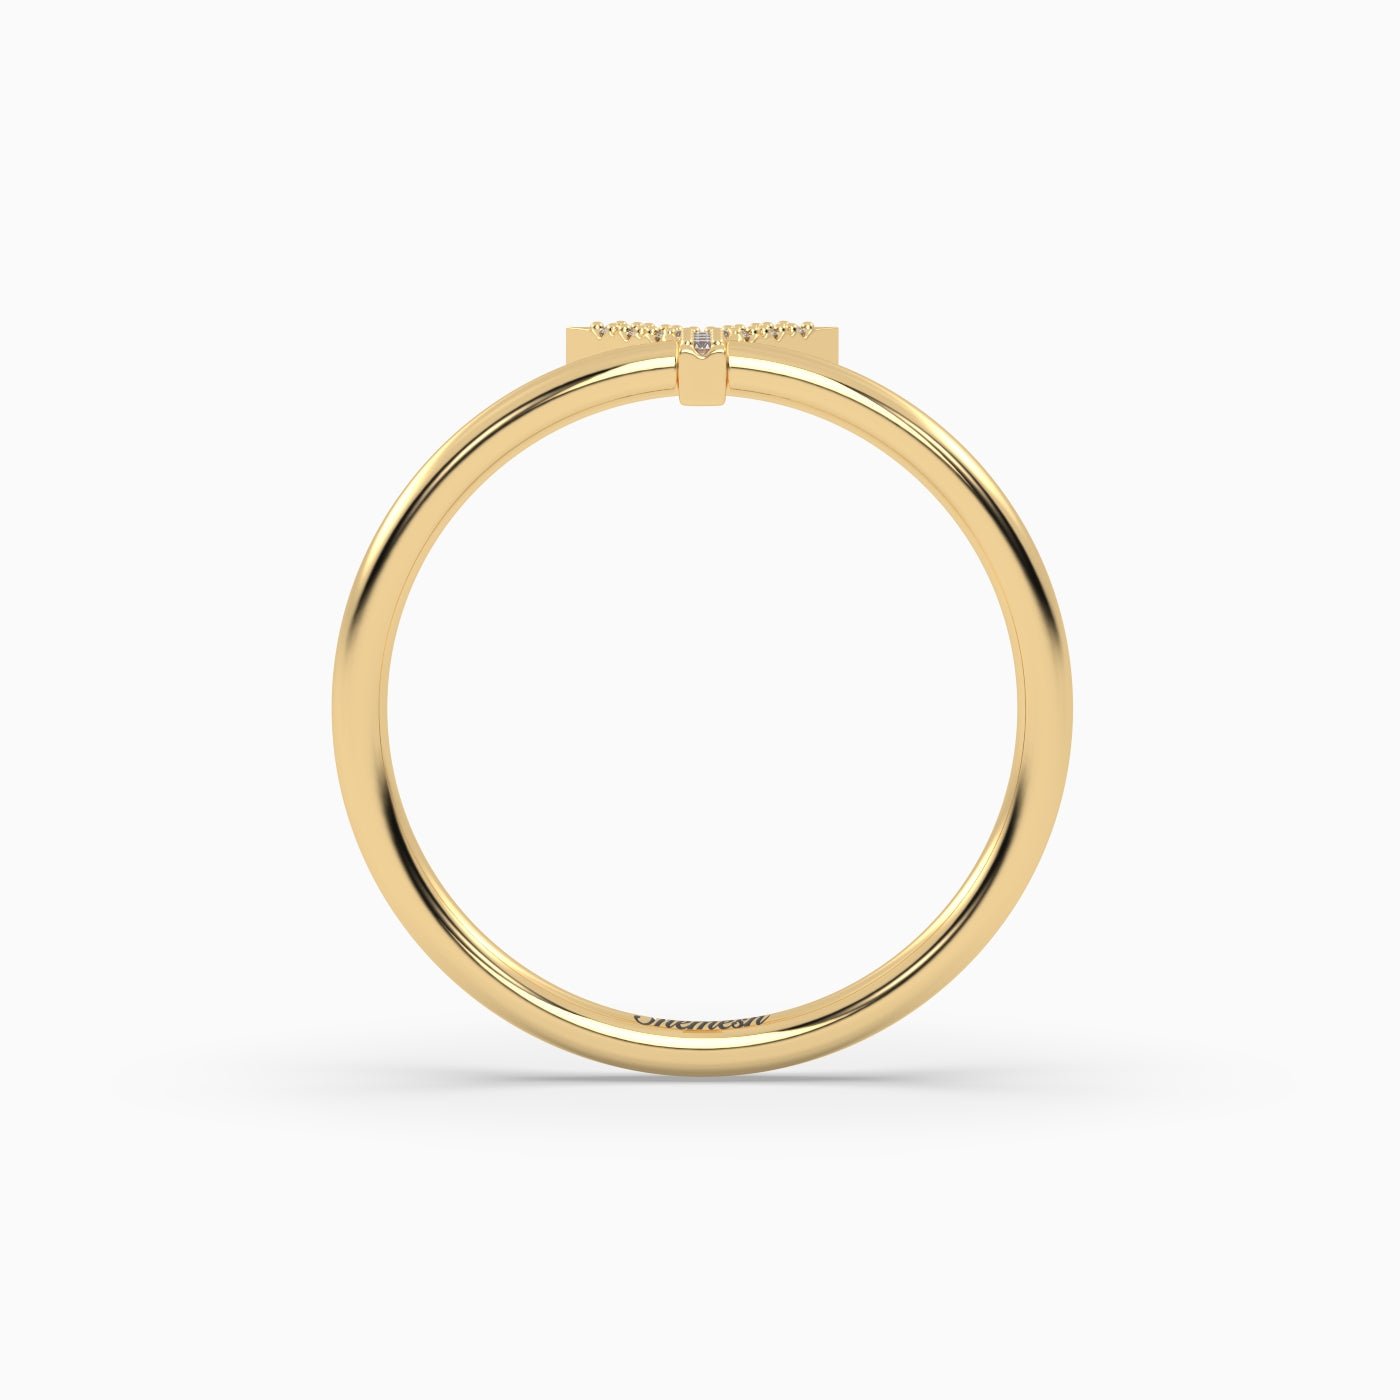 18K Gold "Y" Initial Ring - shemesh_diamonds